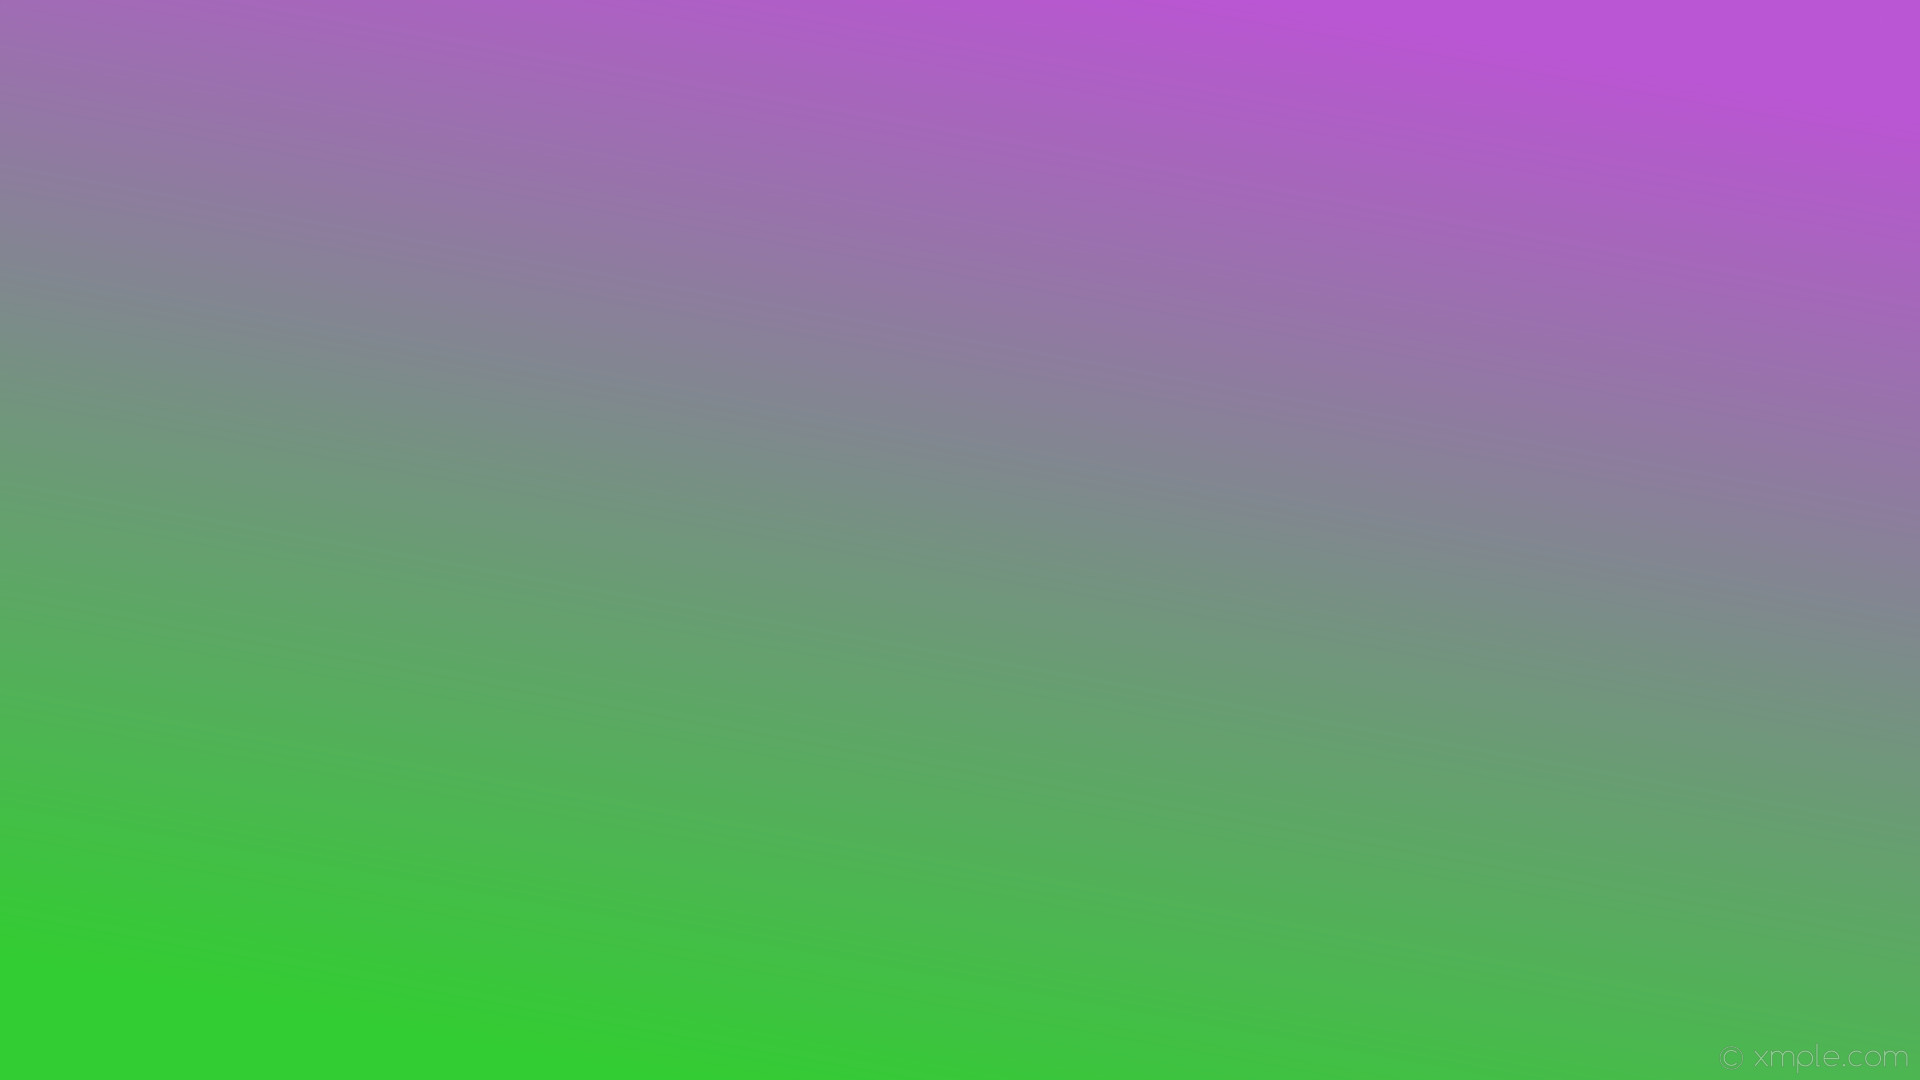 1920x1080 wallpaper purple gradient green linear medium orchid lime green #ba55d3  #32cd32 60Â°